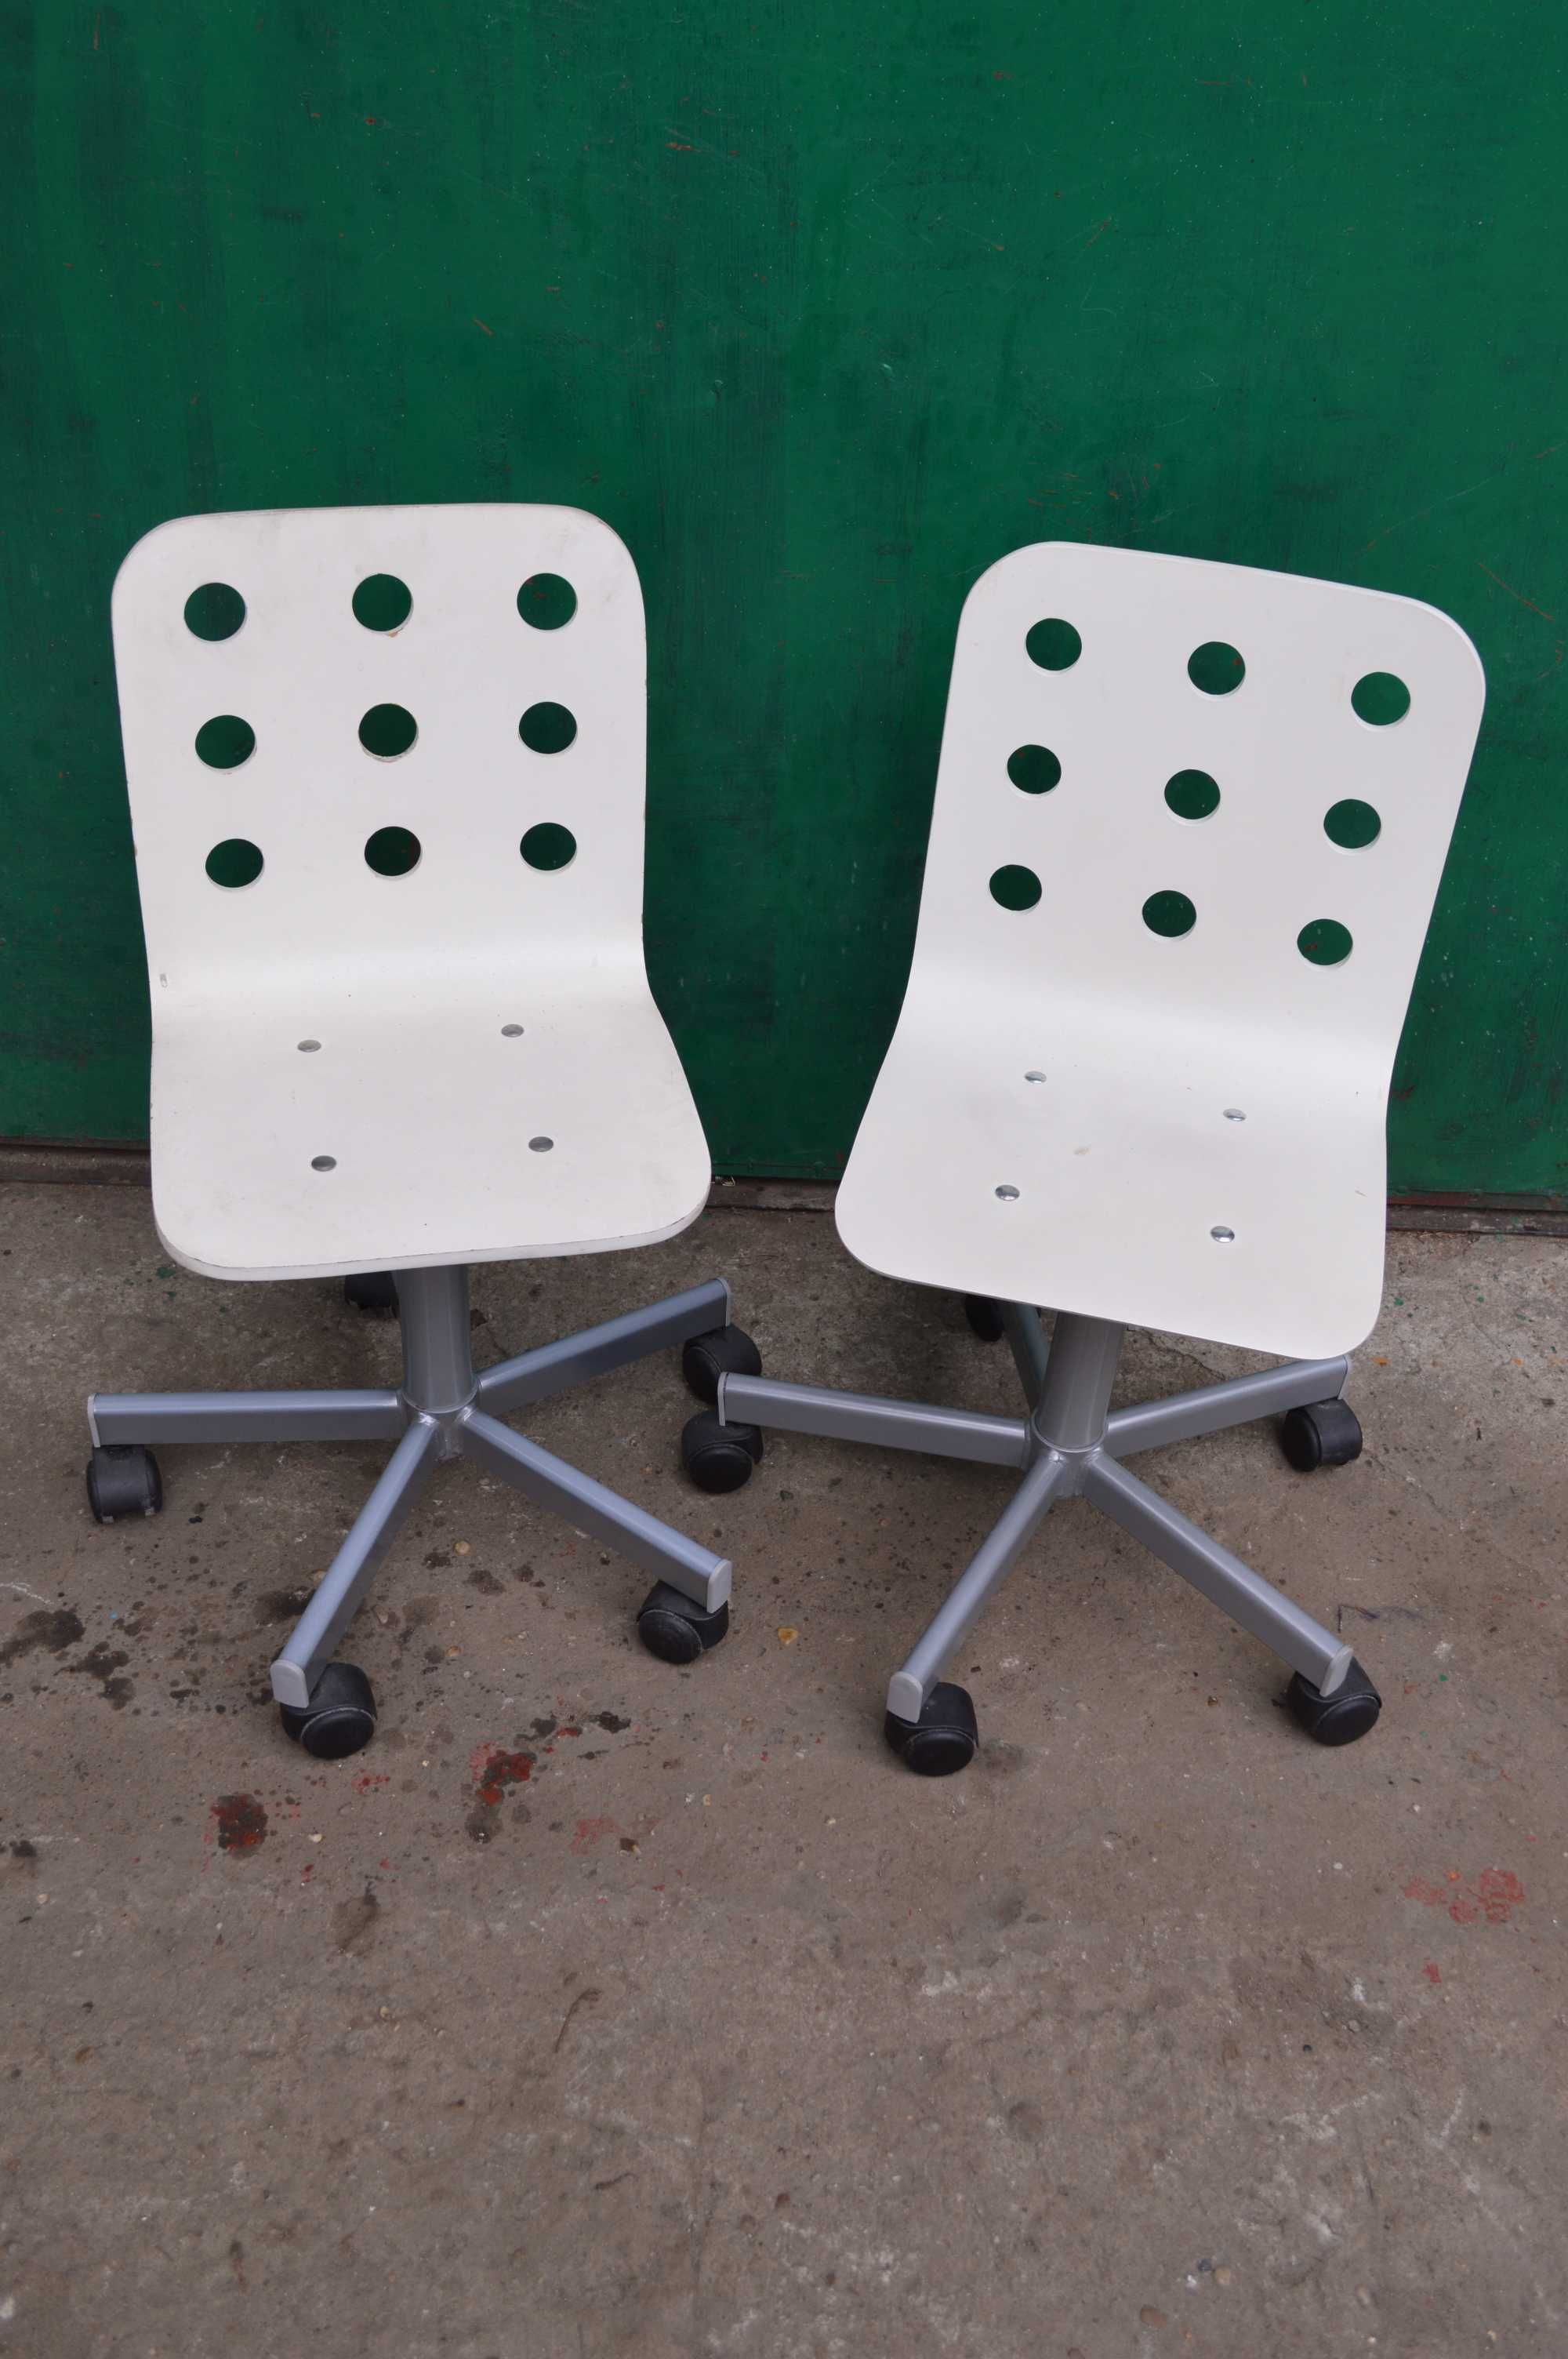 krzeslo obrotowe krzeslo na kolkach